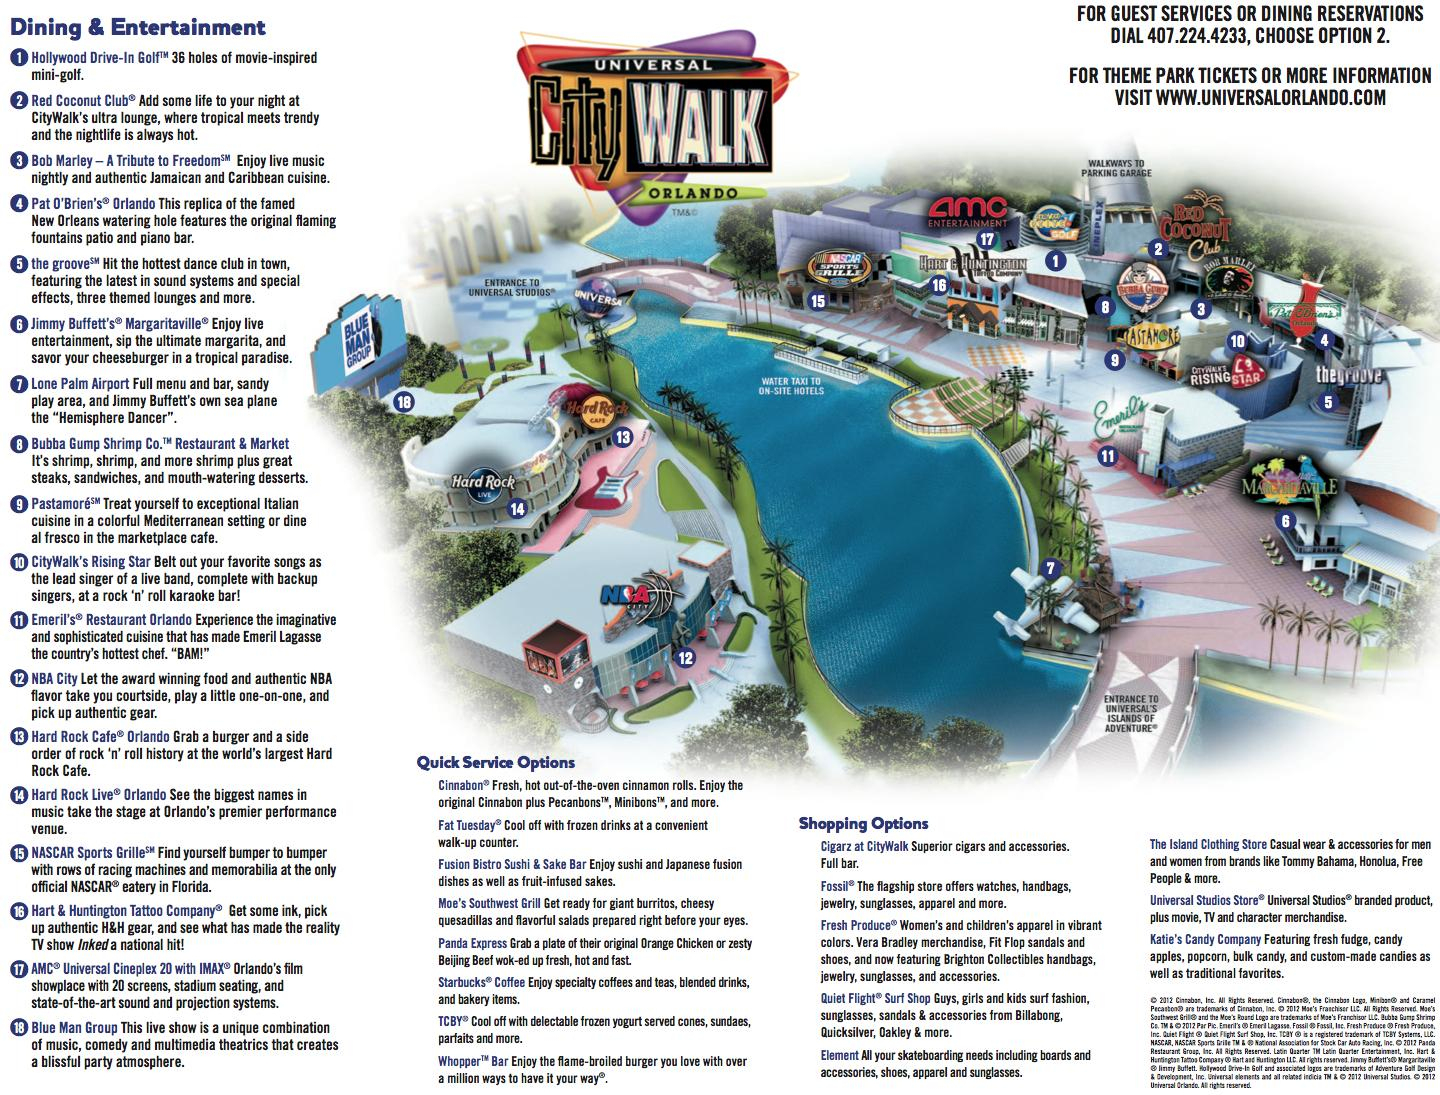 Citywalk Orlando Map - Universal Orlando Citywalk Map (Florida - Usa) - Universal Studios Florida Citywalk Map